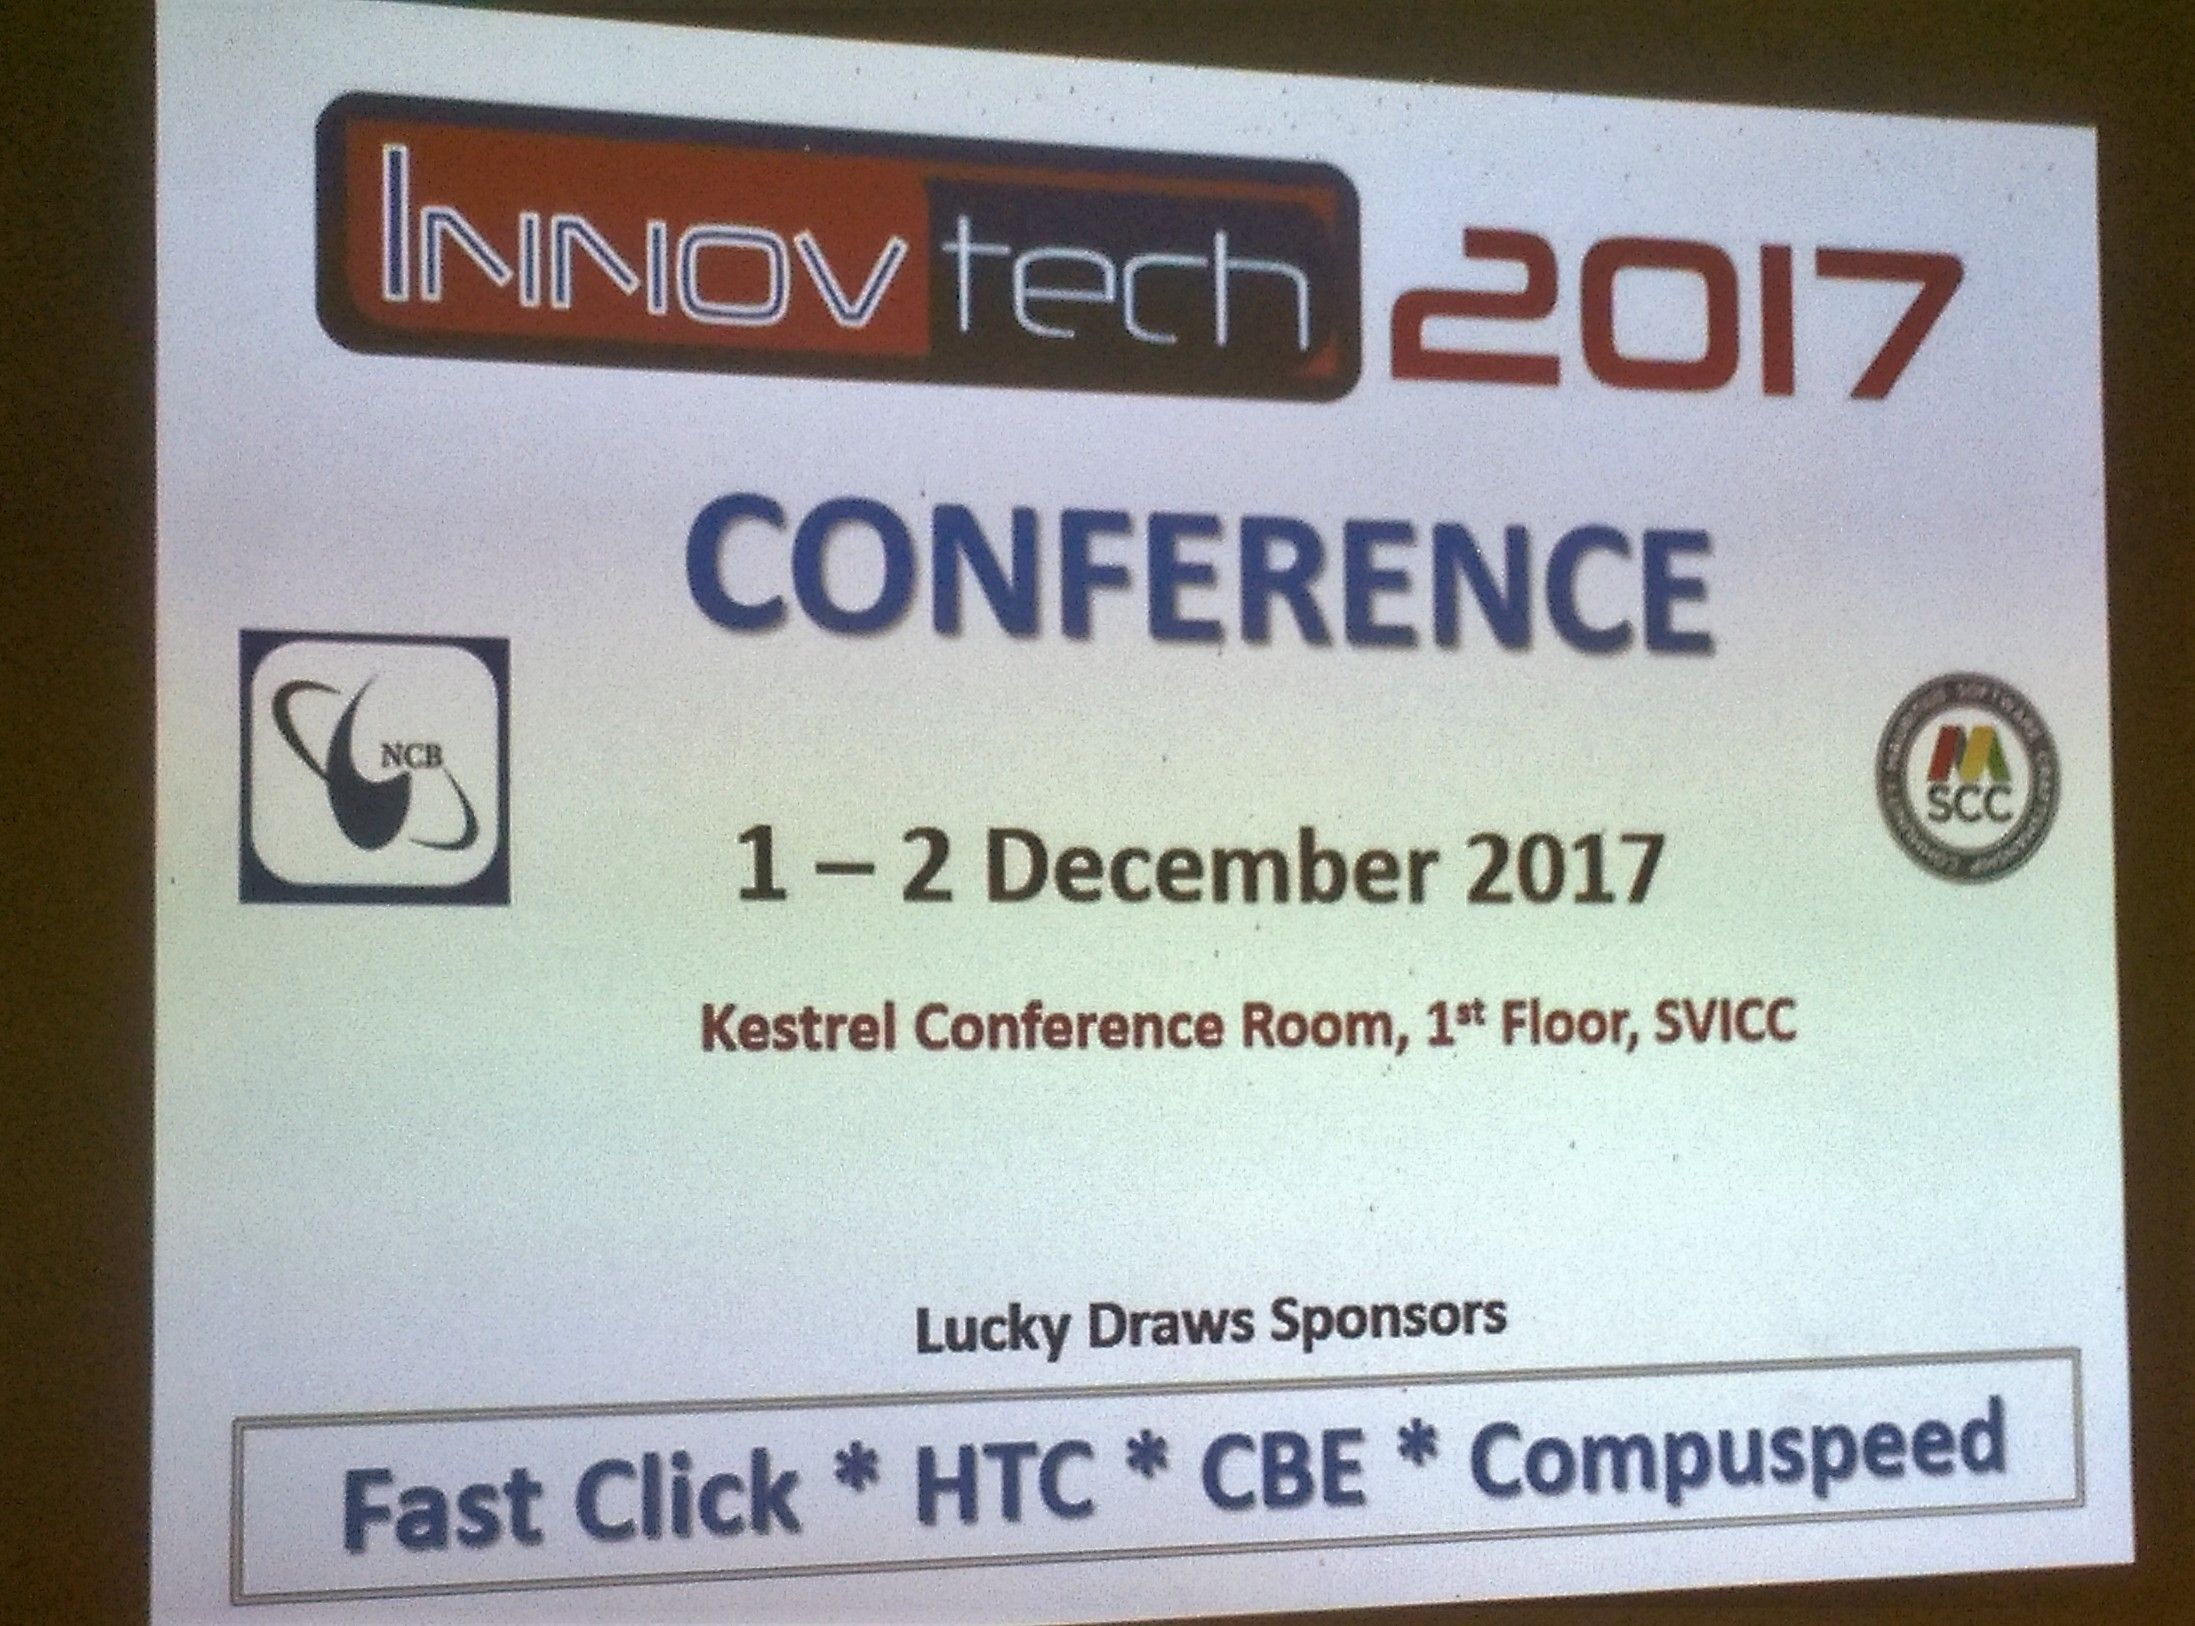 Infotech/InnovTech 2017